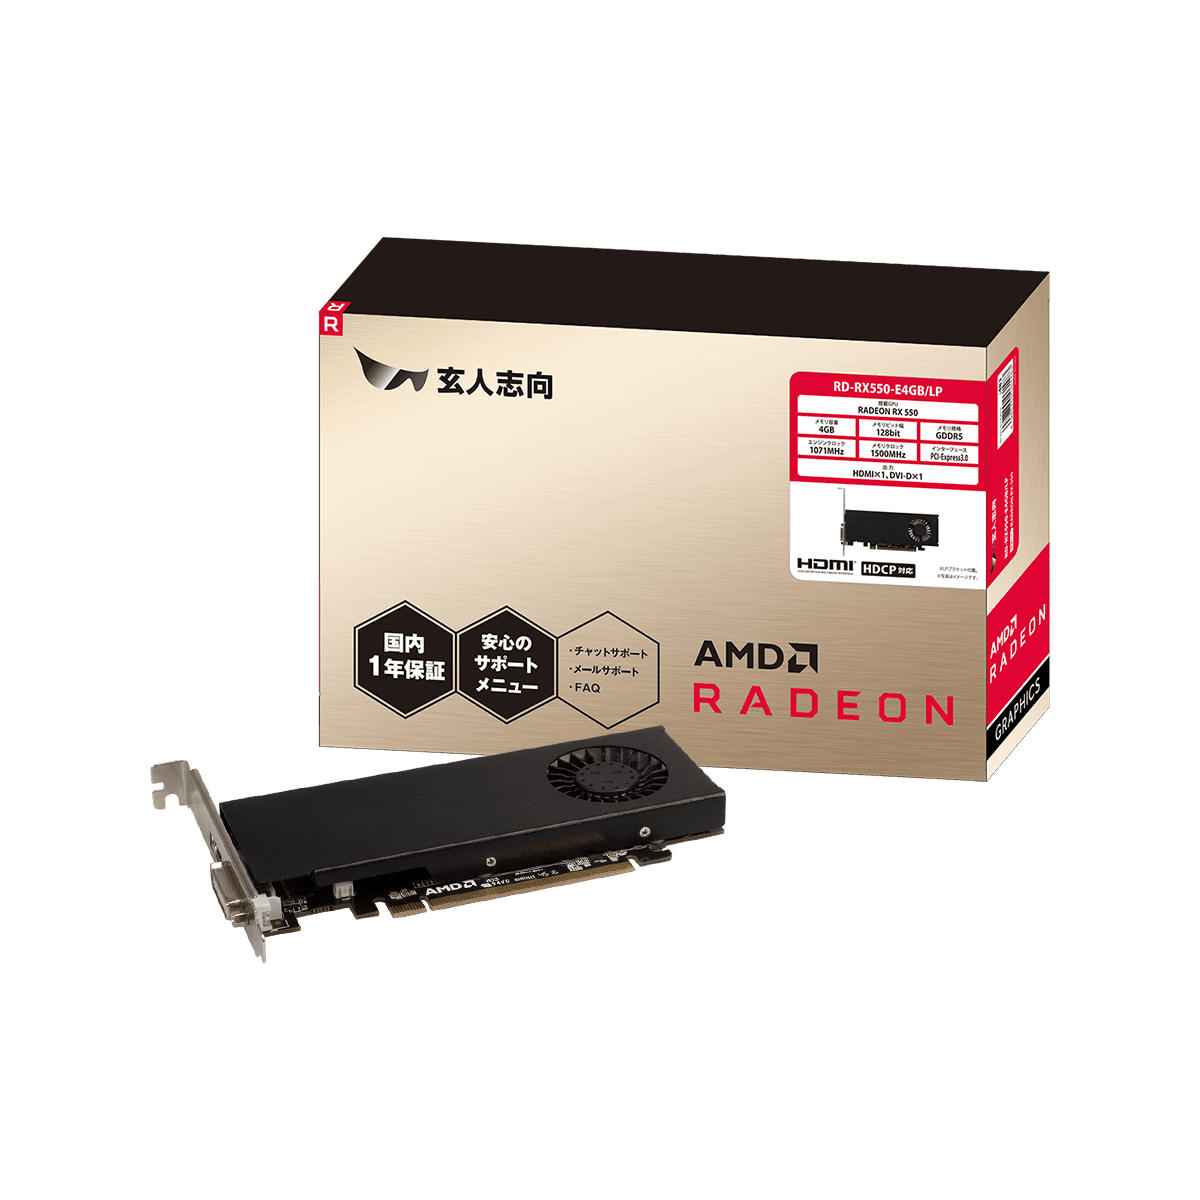 Radeon RX 550 搭載 ロープロファイル対応 グラフィックボード (PCI-Express) RD-RX550-E4GB/LP